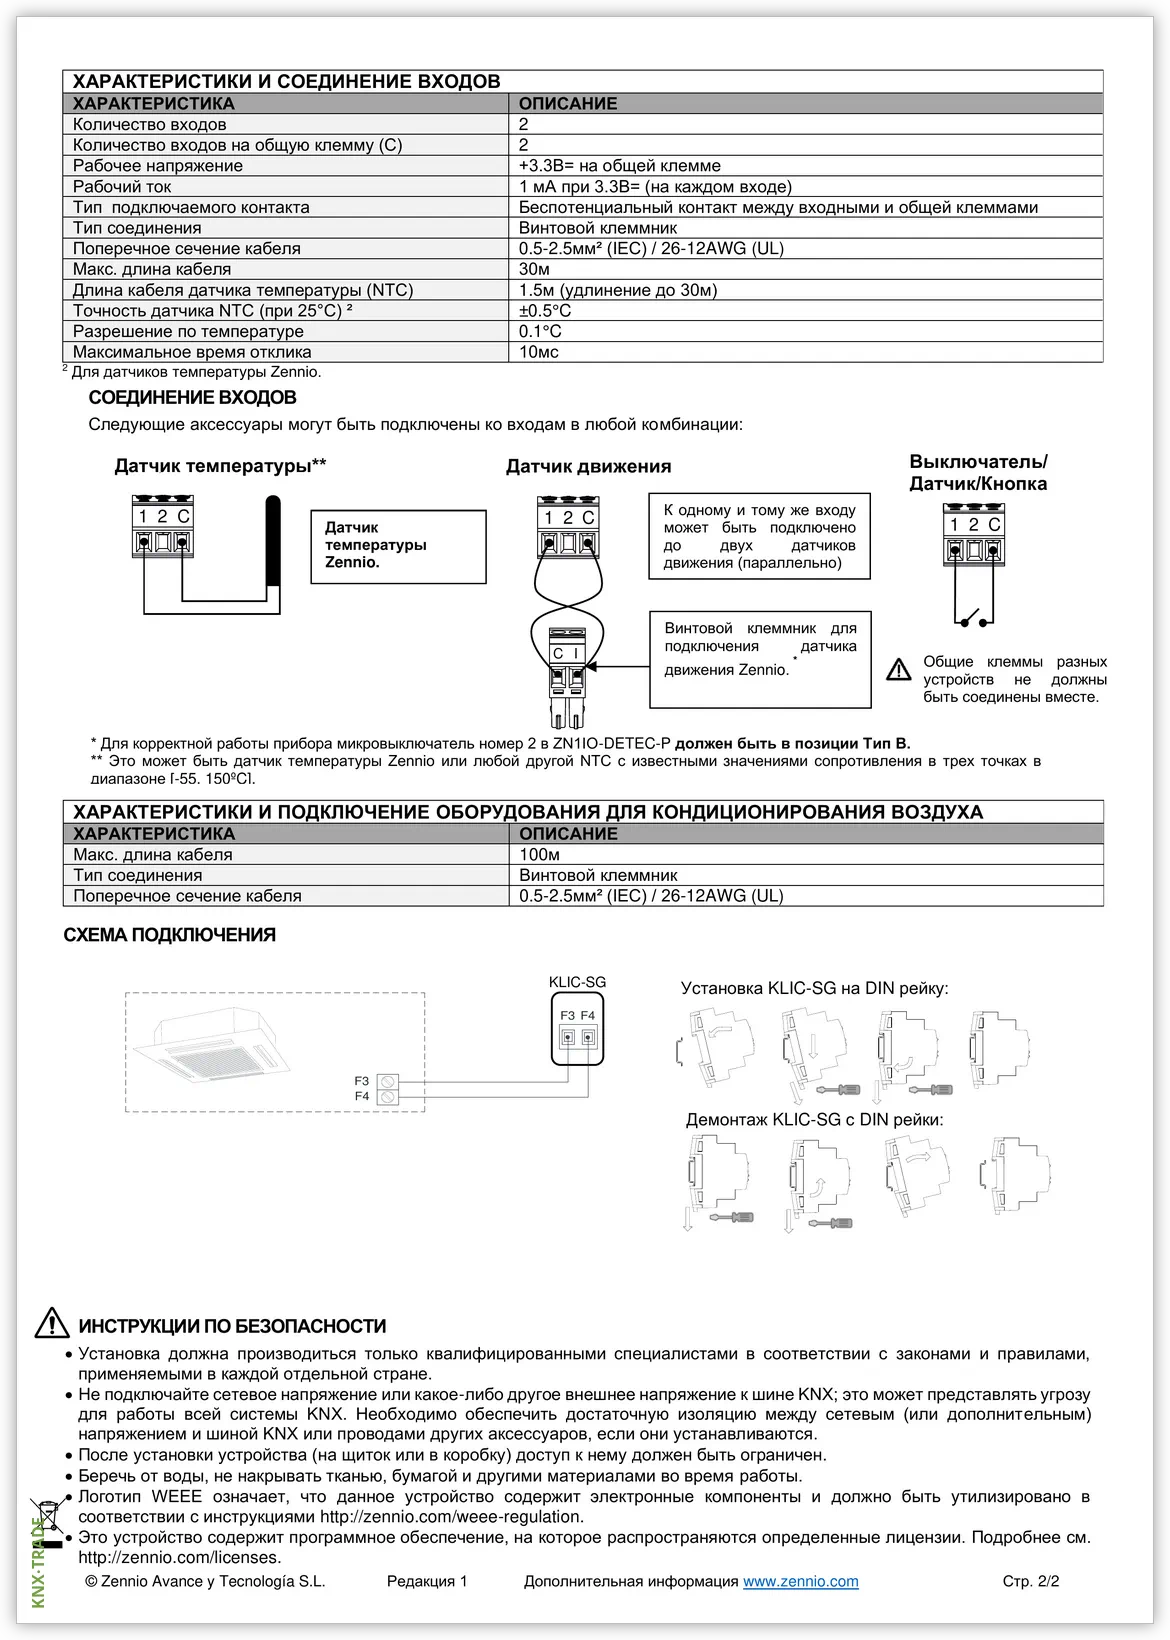 Datasheet (2) Zennio [ZCLSG] KLIC-SG / Шлюз KNX для управления кондиционерами Samsung VRF